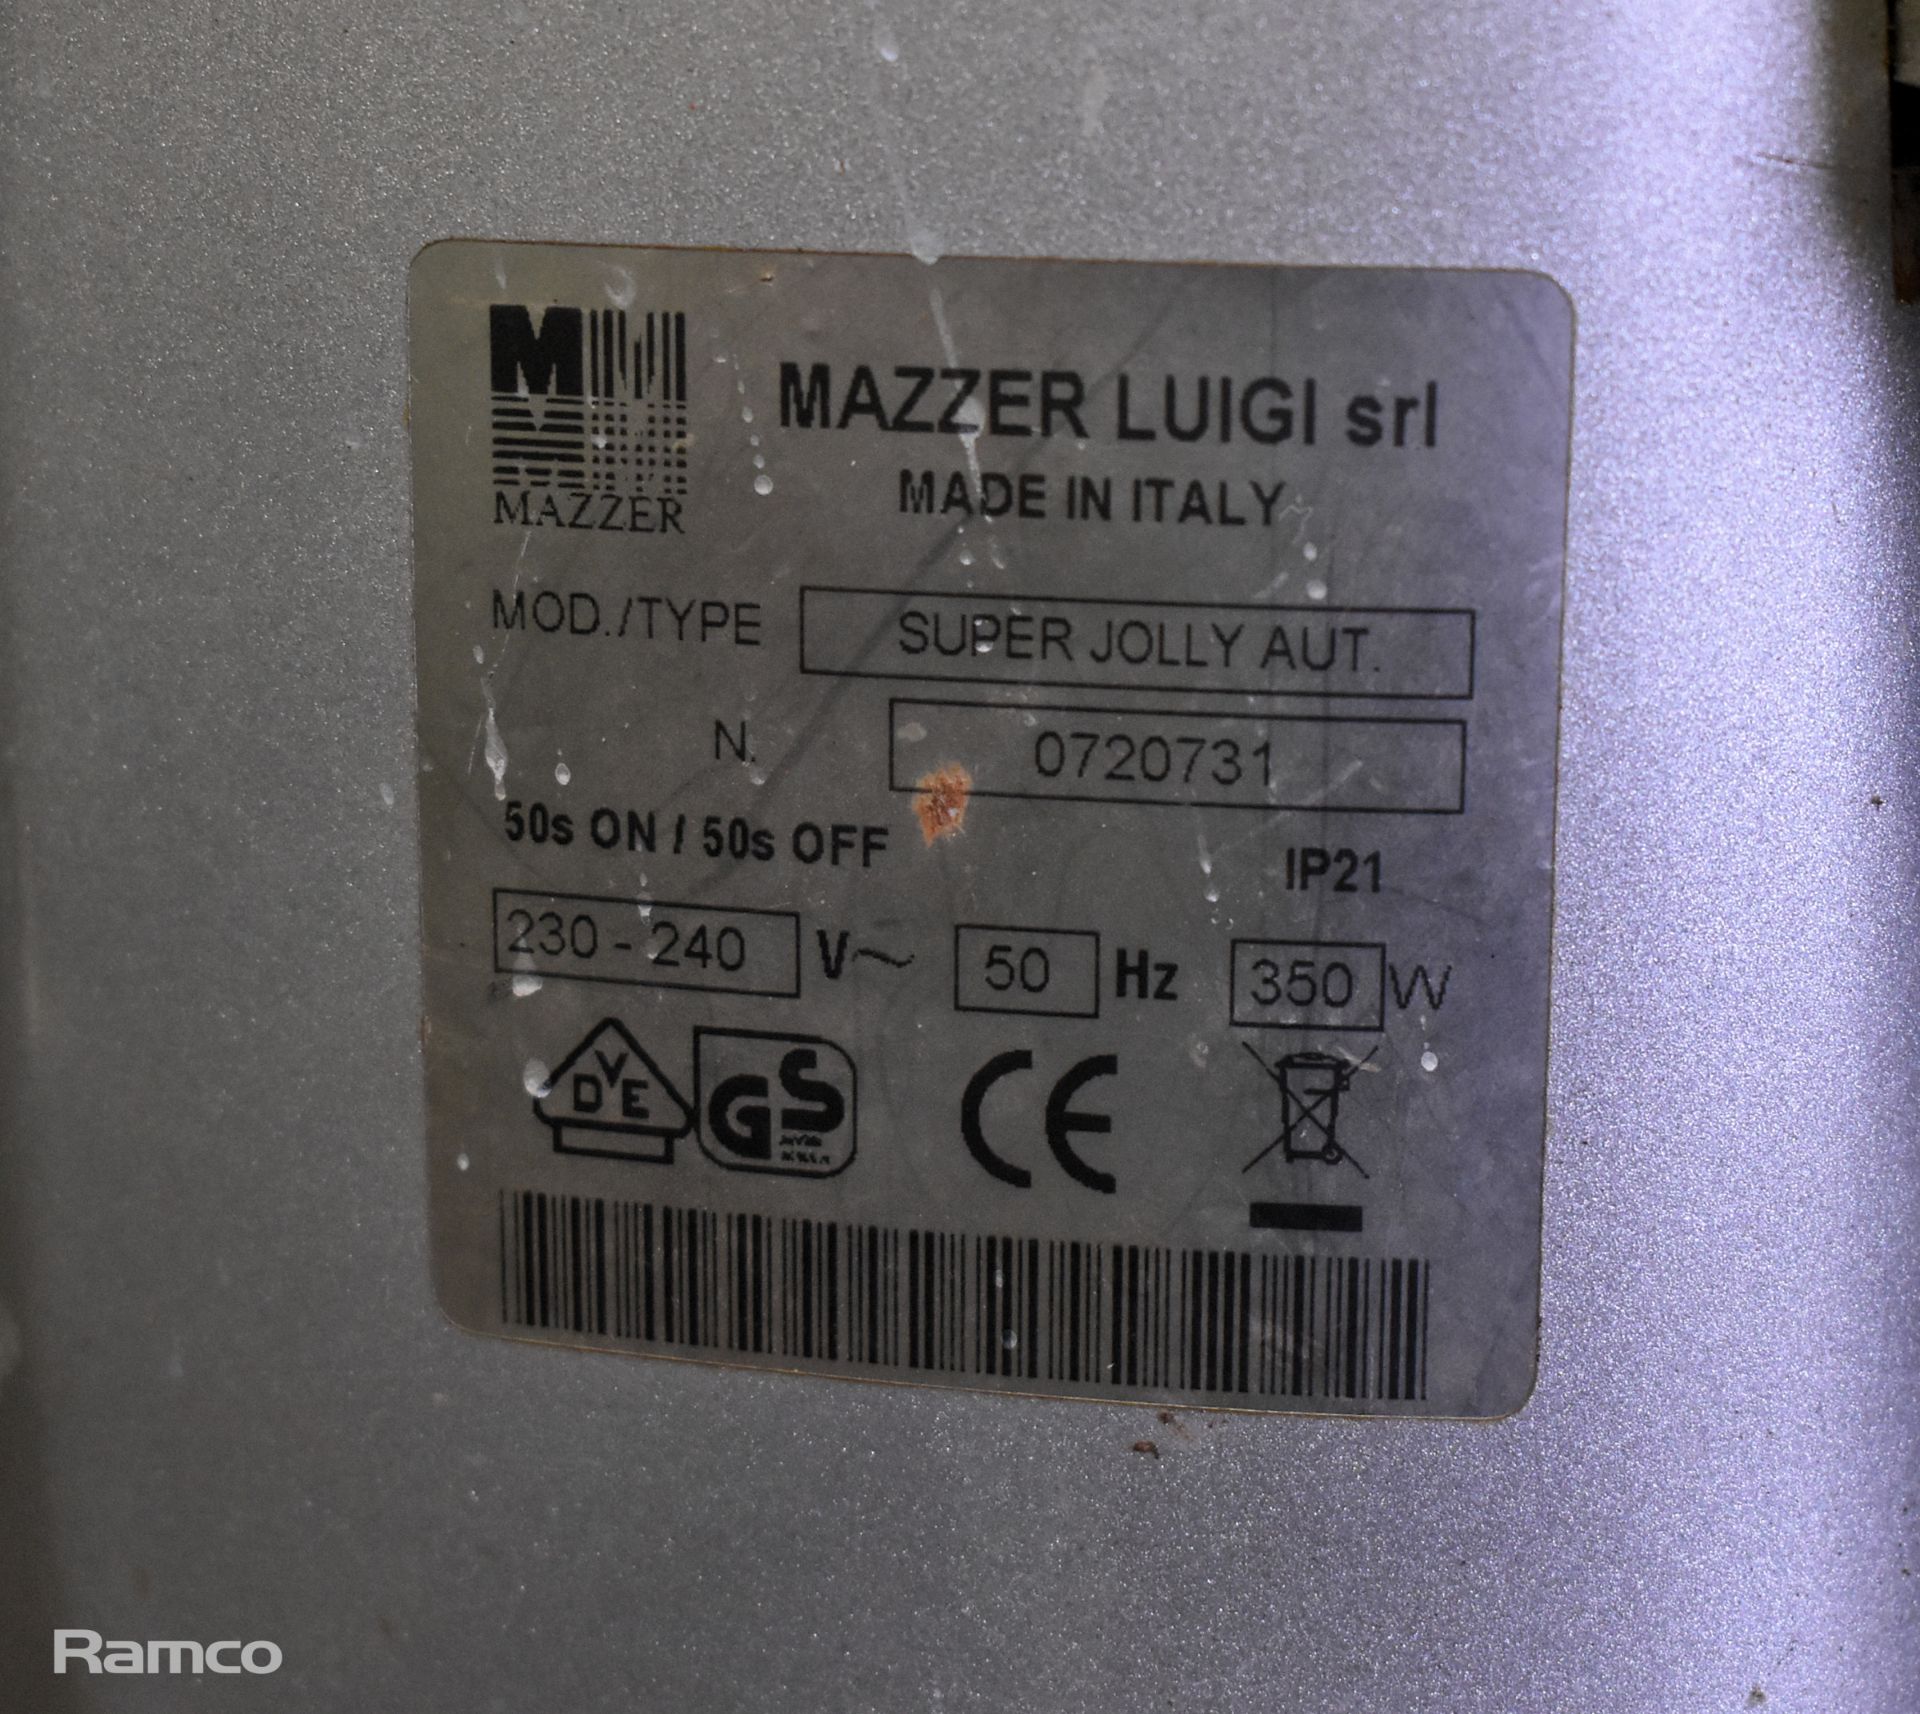 2x Mazzer Luigi Super Jolly AUT espresso coffee grinders - Image 3 of 12